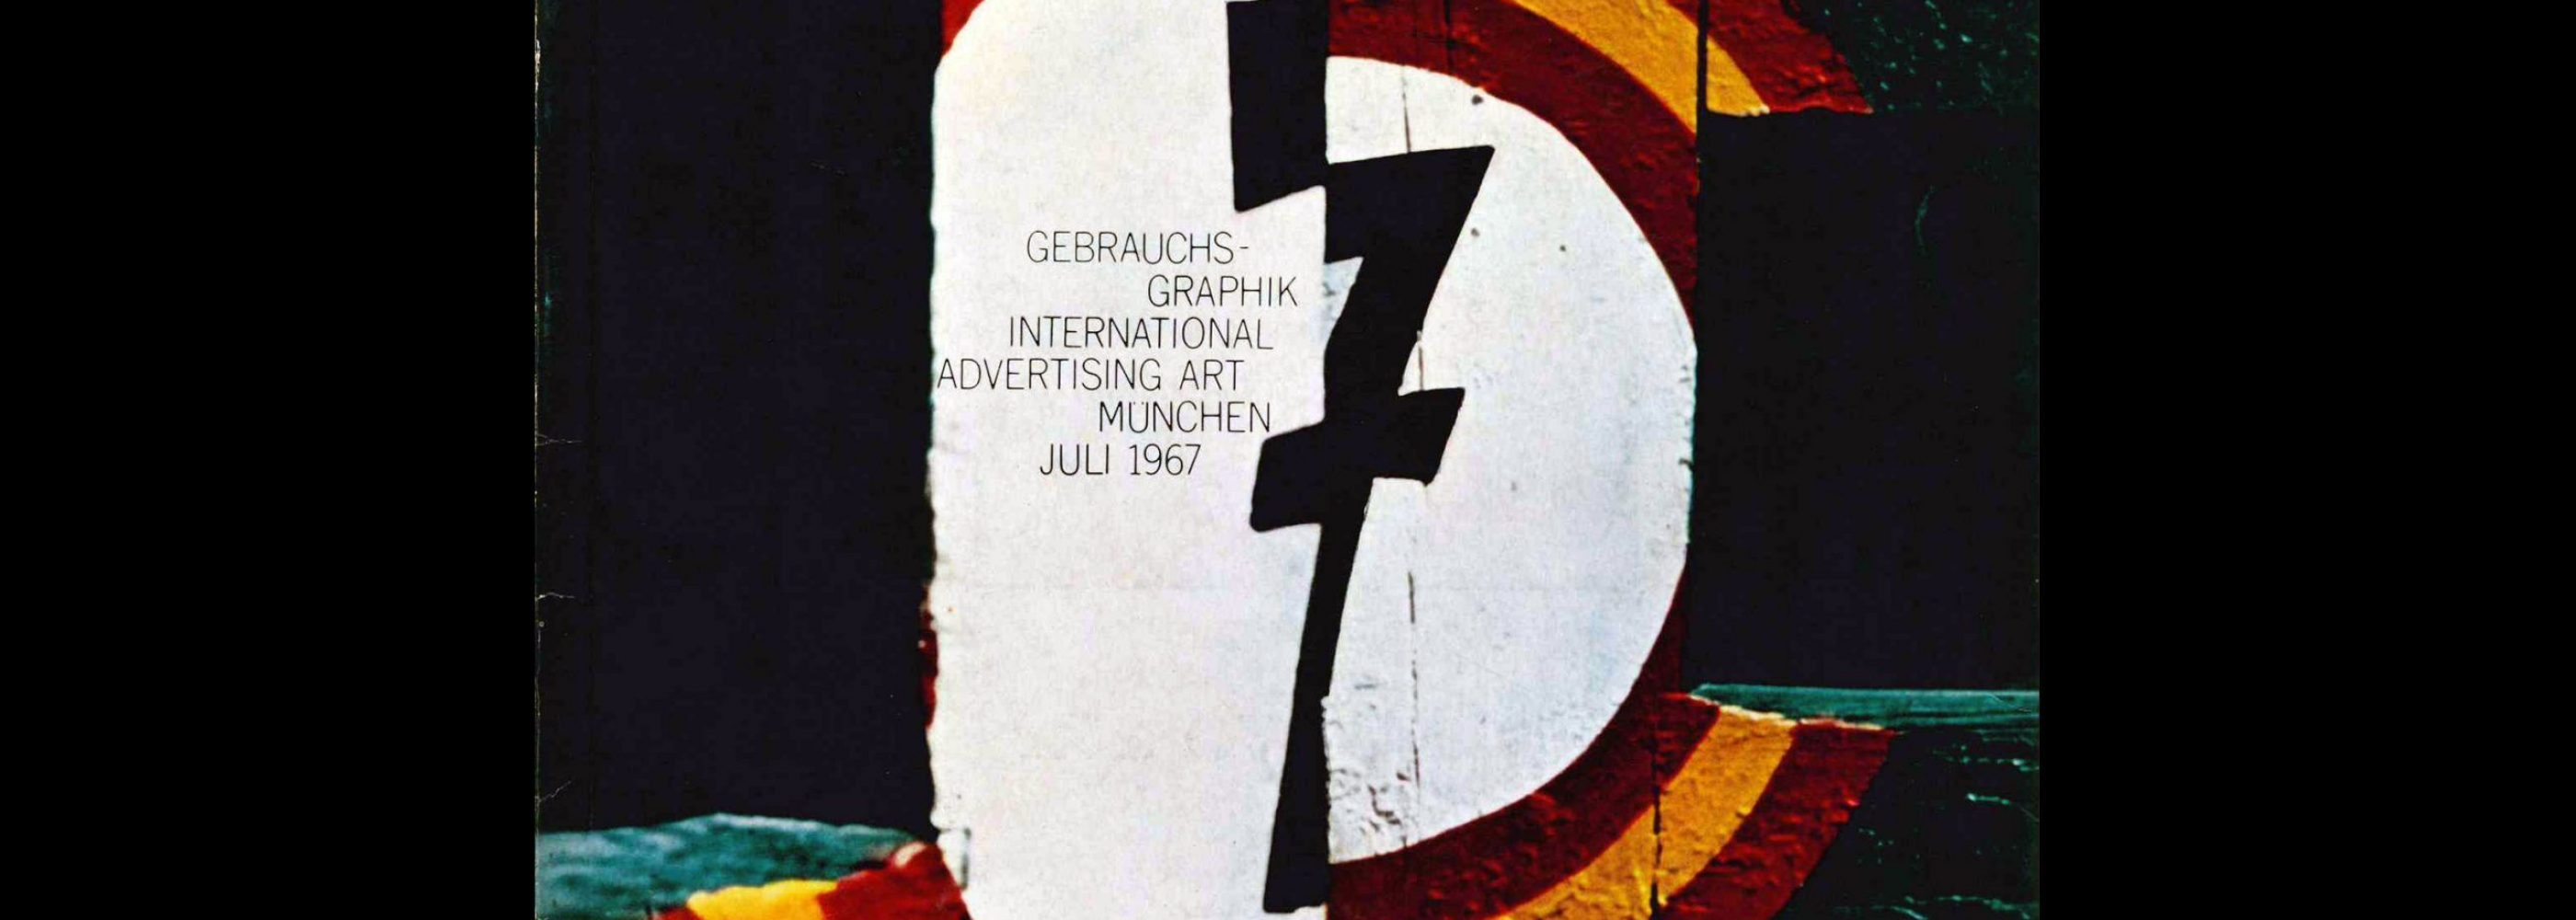 Gebrauchsgraphik, 7, 1967. Cover design by F. & S. Haase-Knels